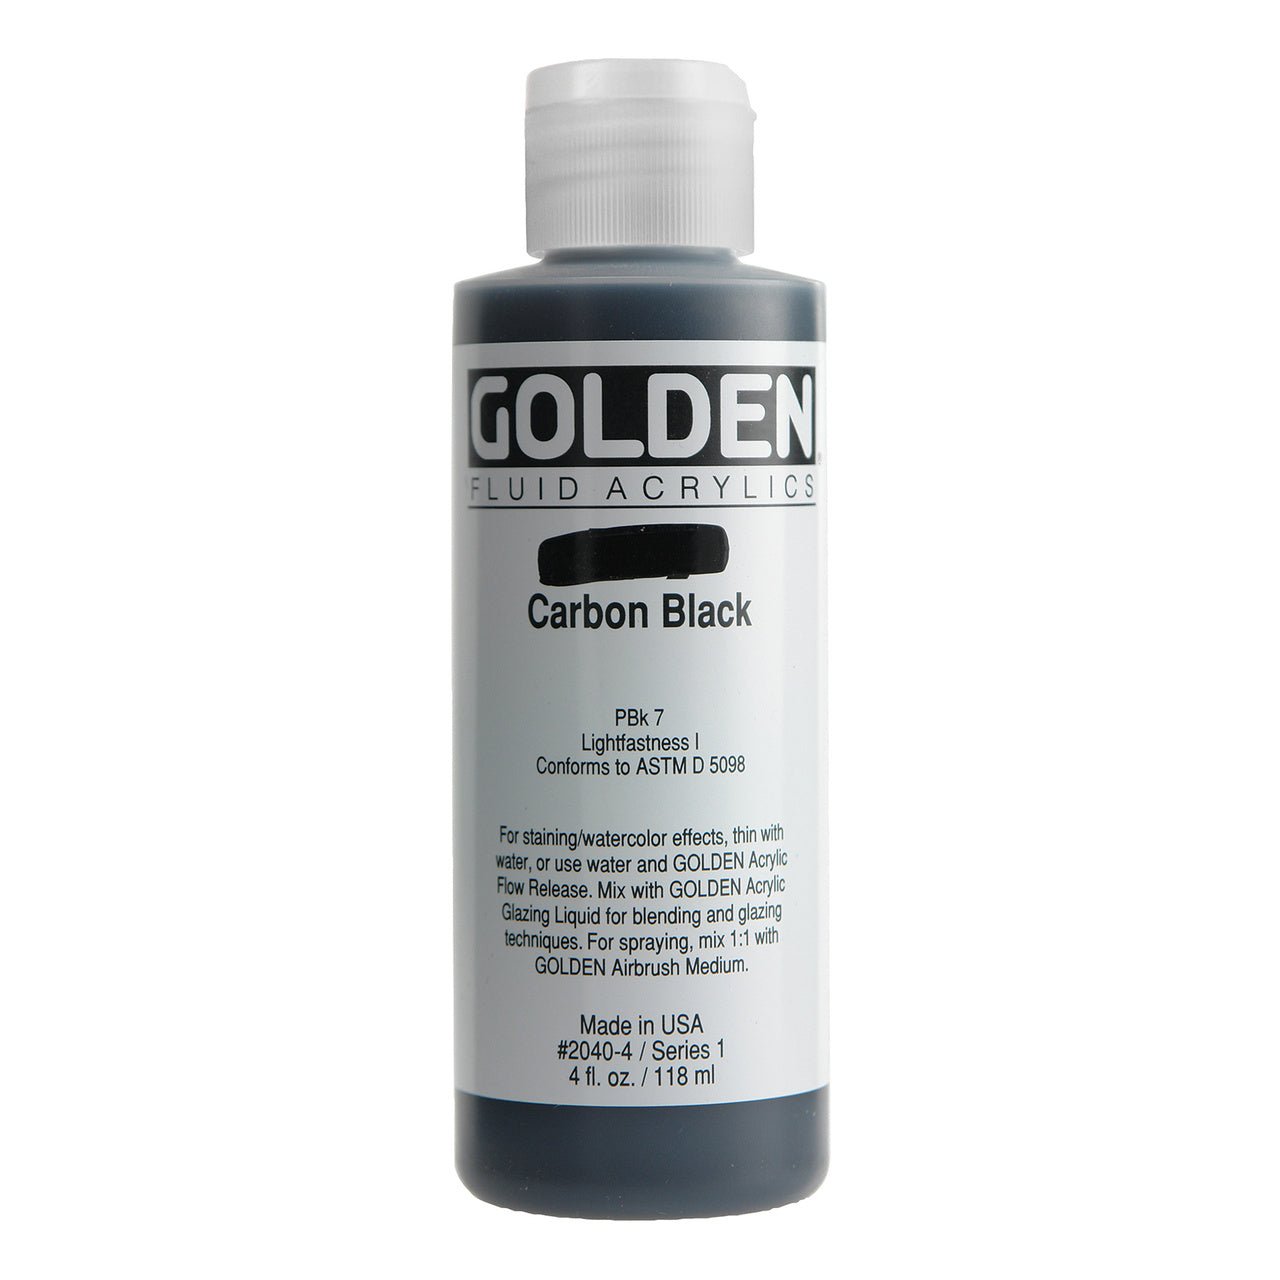 Golden Fluid Acrylic Carbon Black 4 oz - merriartist.com